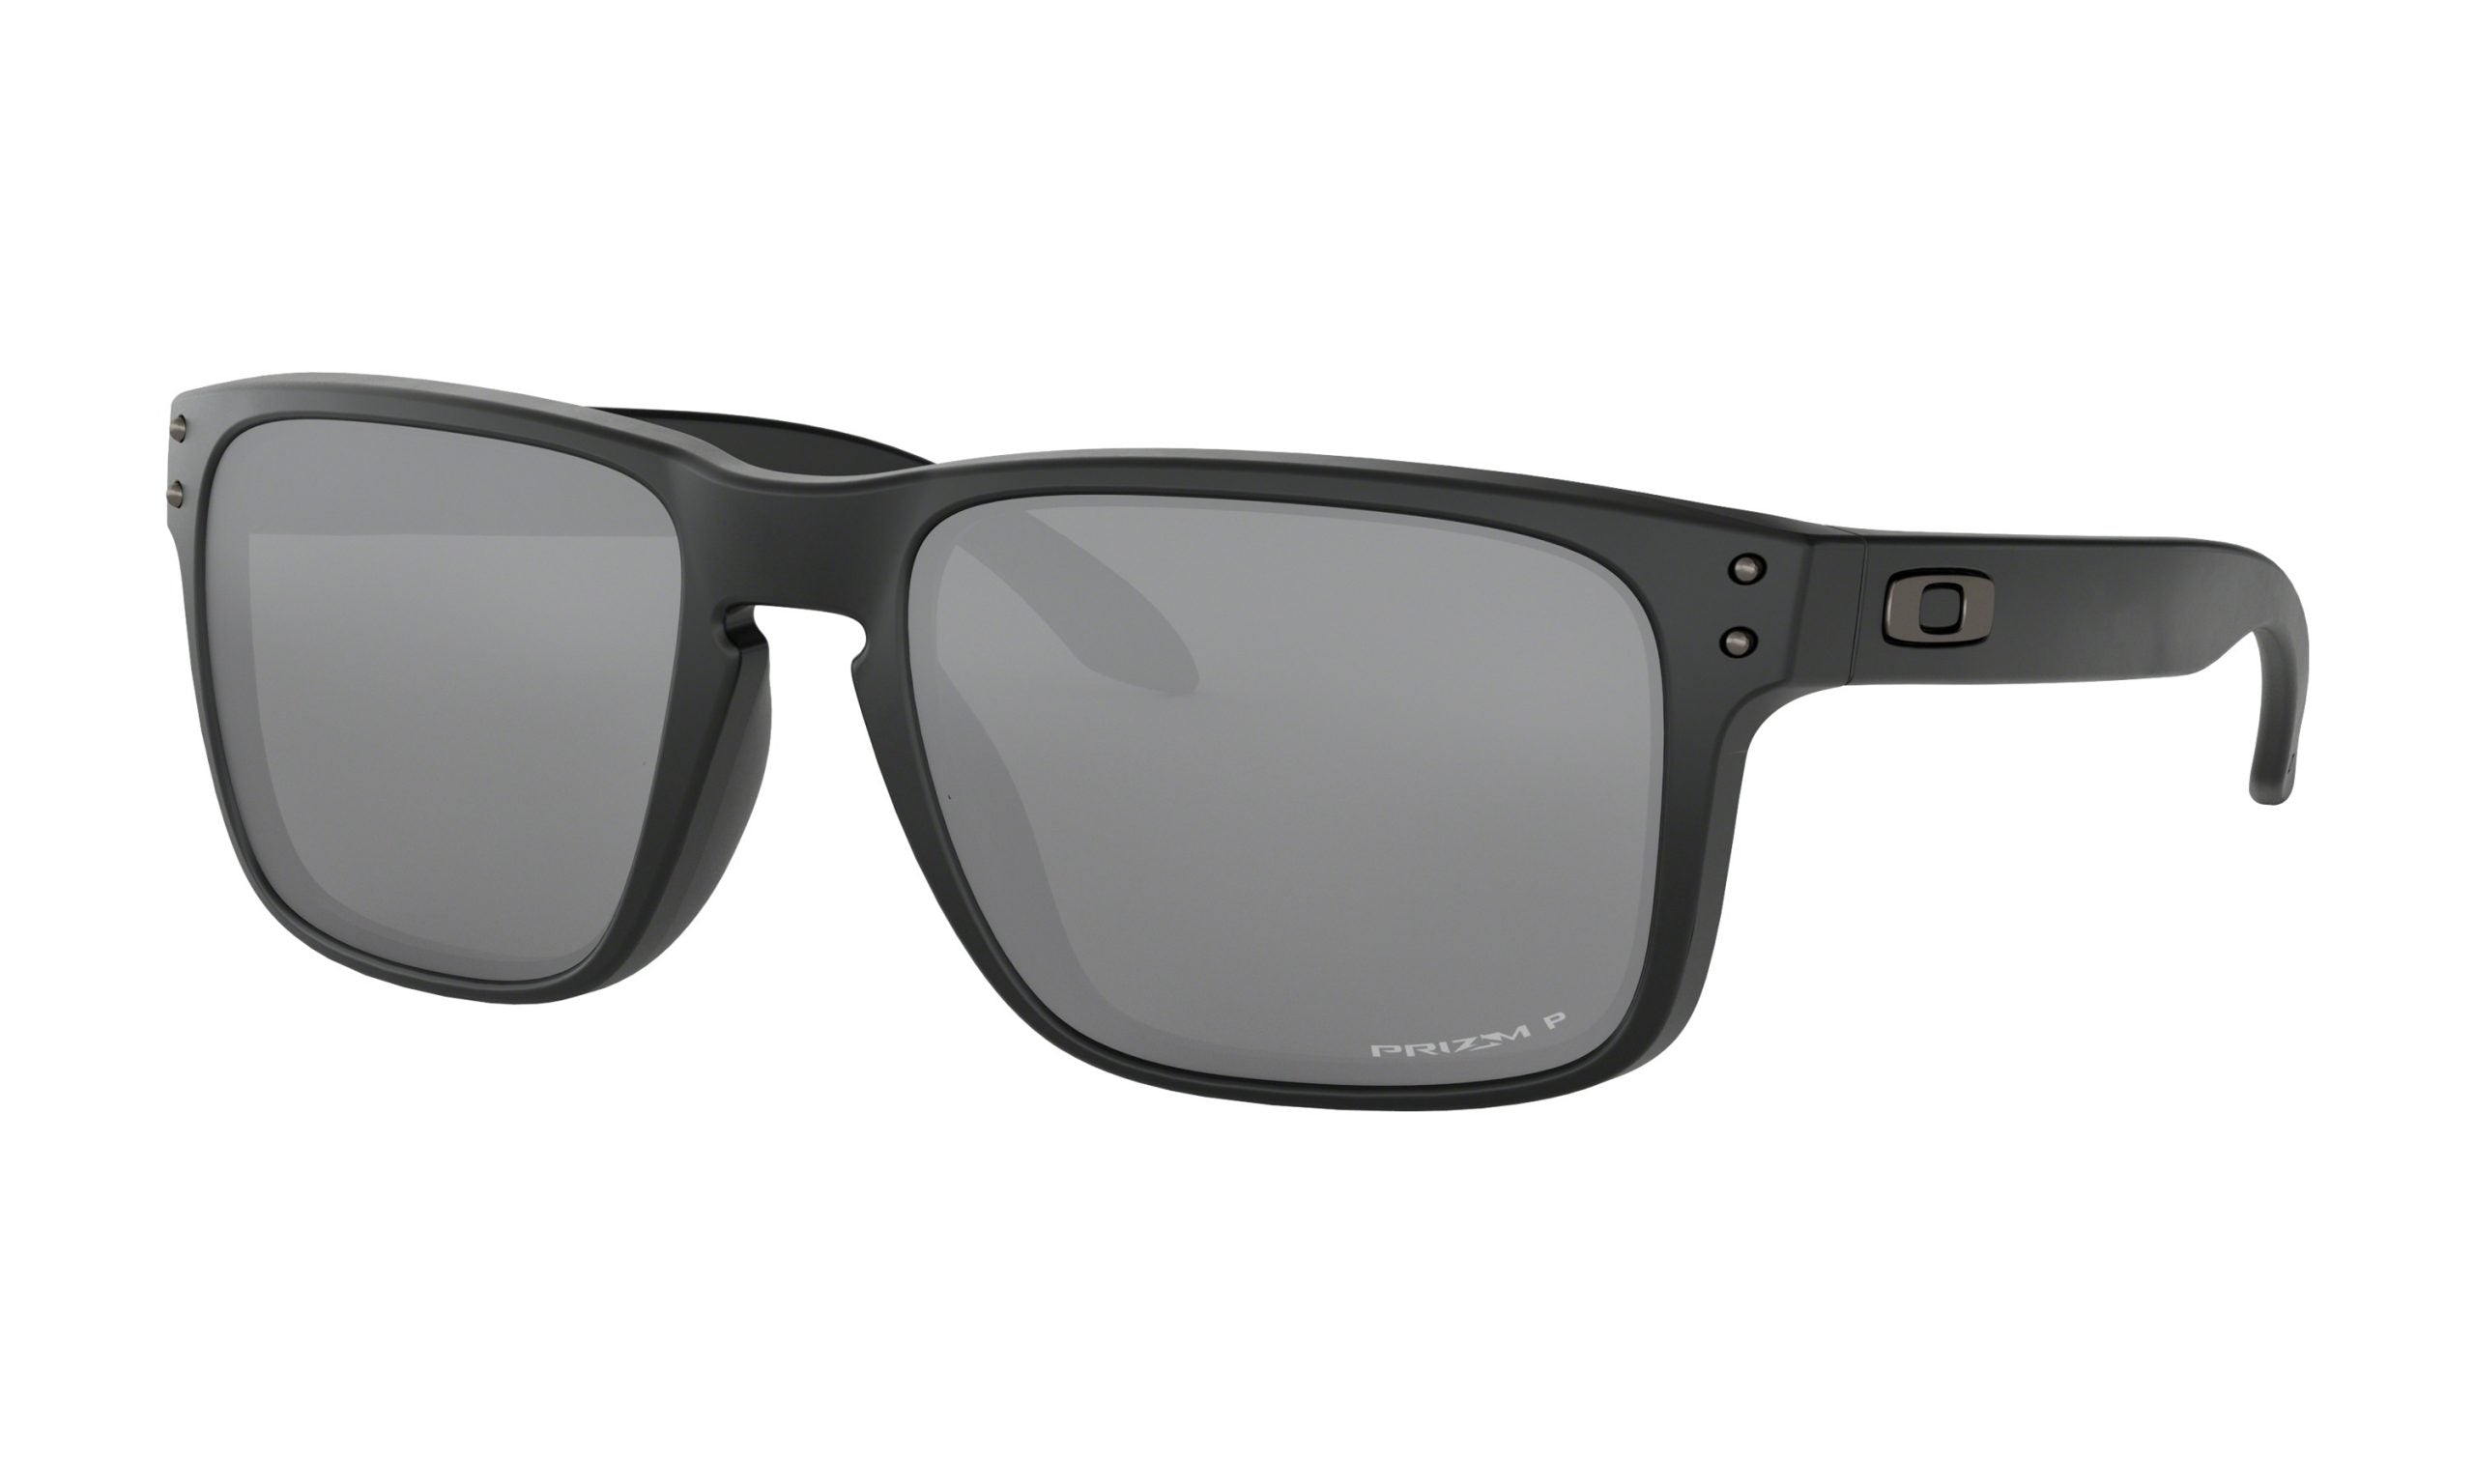 OAKLEY Holbrook Sunglasses - Matte Black - Prizm Black Polarized Lens